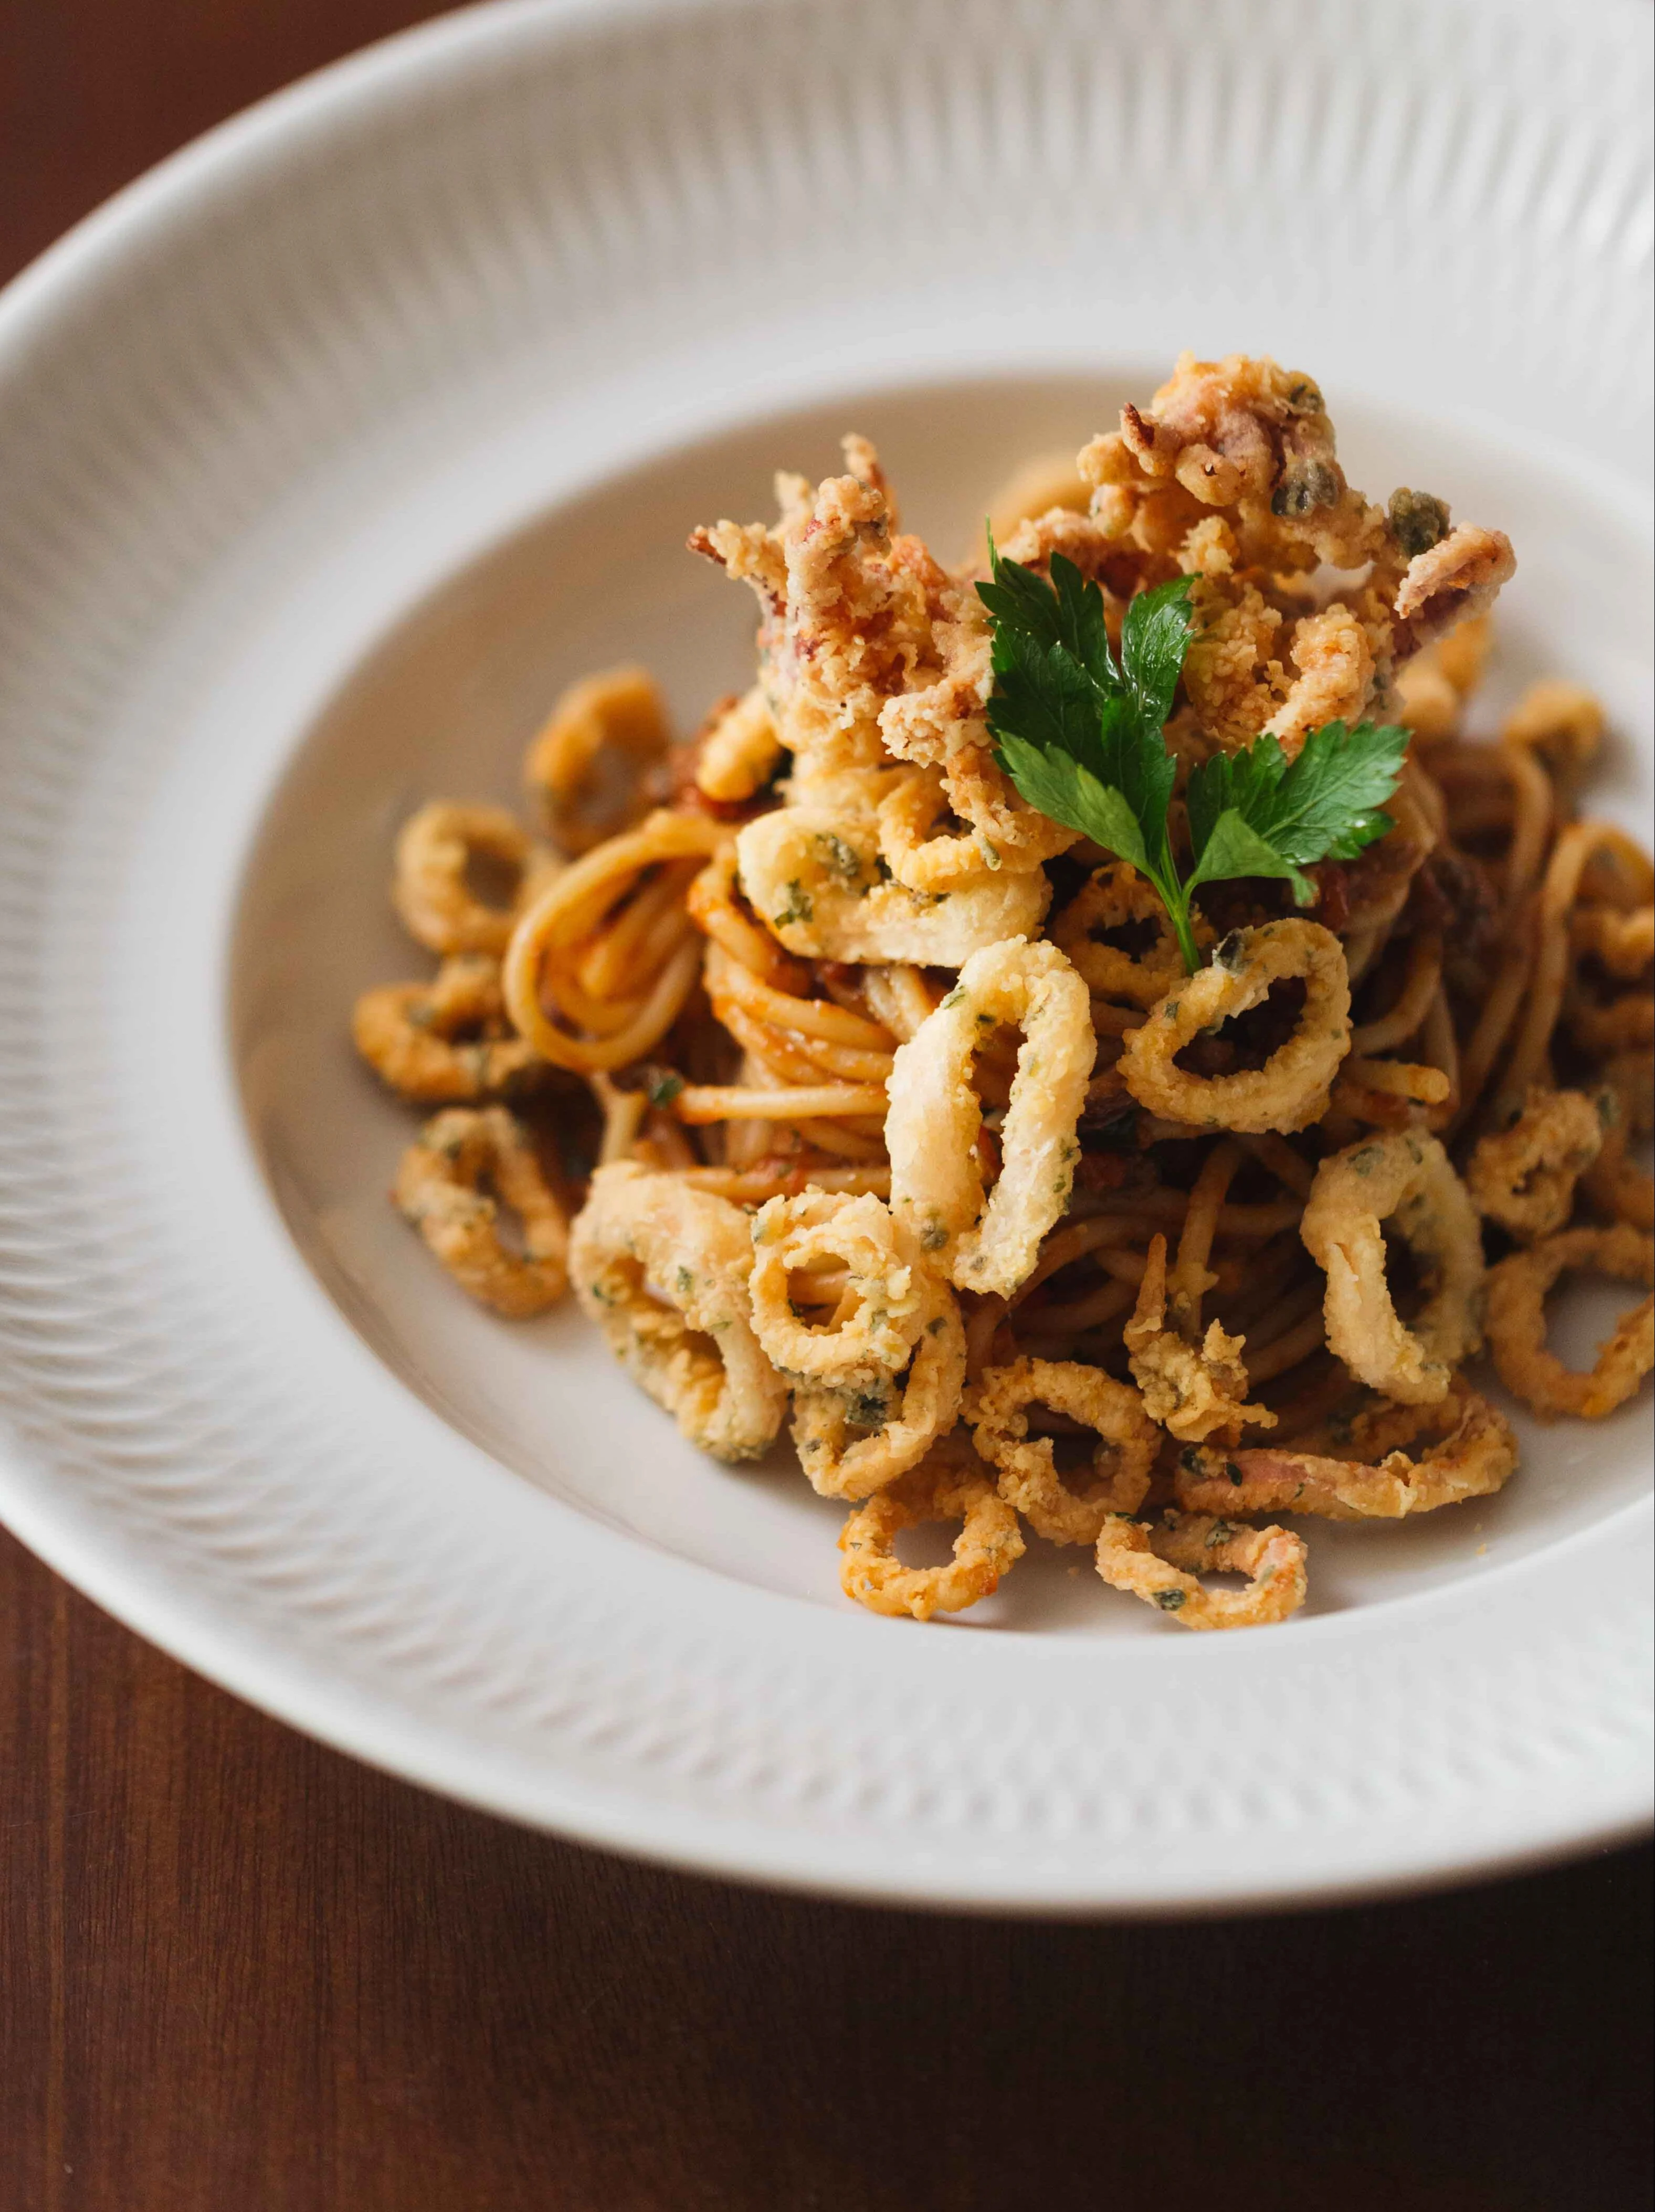 Spaghetti alla Puttanesca with Fried Calamari